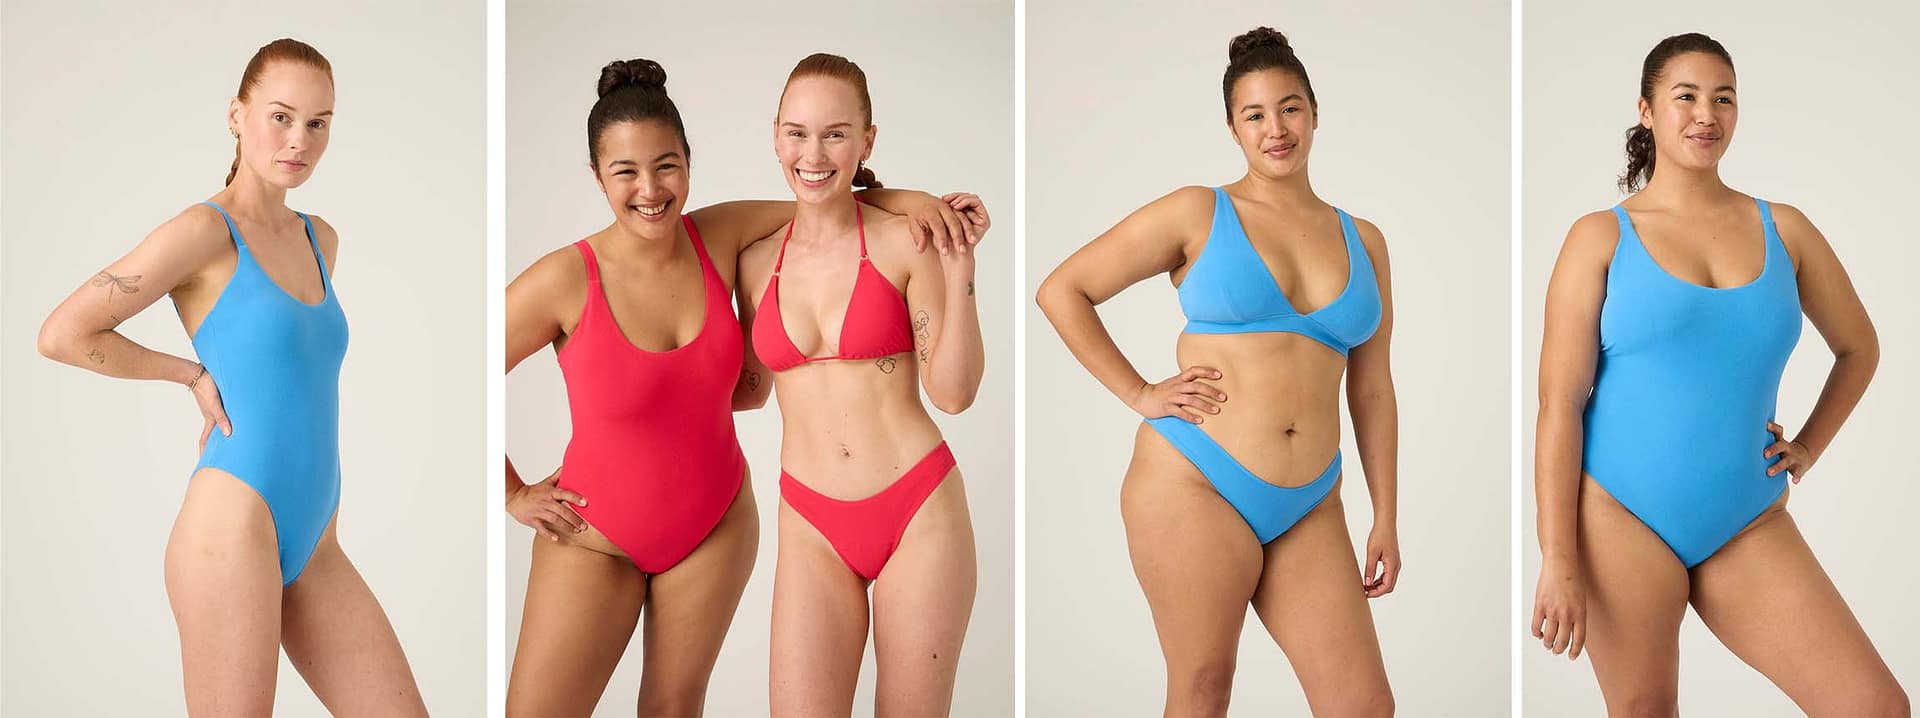 New Leak Proof Swimwear For Winter Getaways From Modibodi - Sustain Health  Magazine